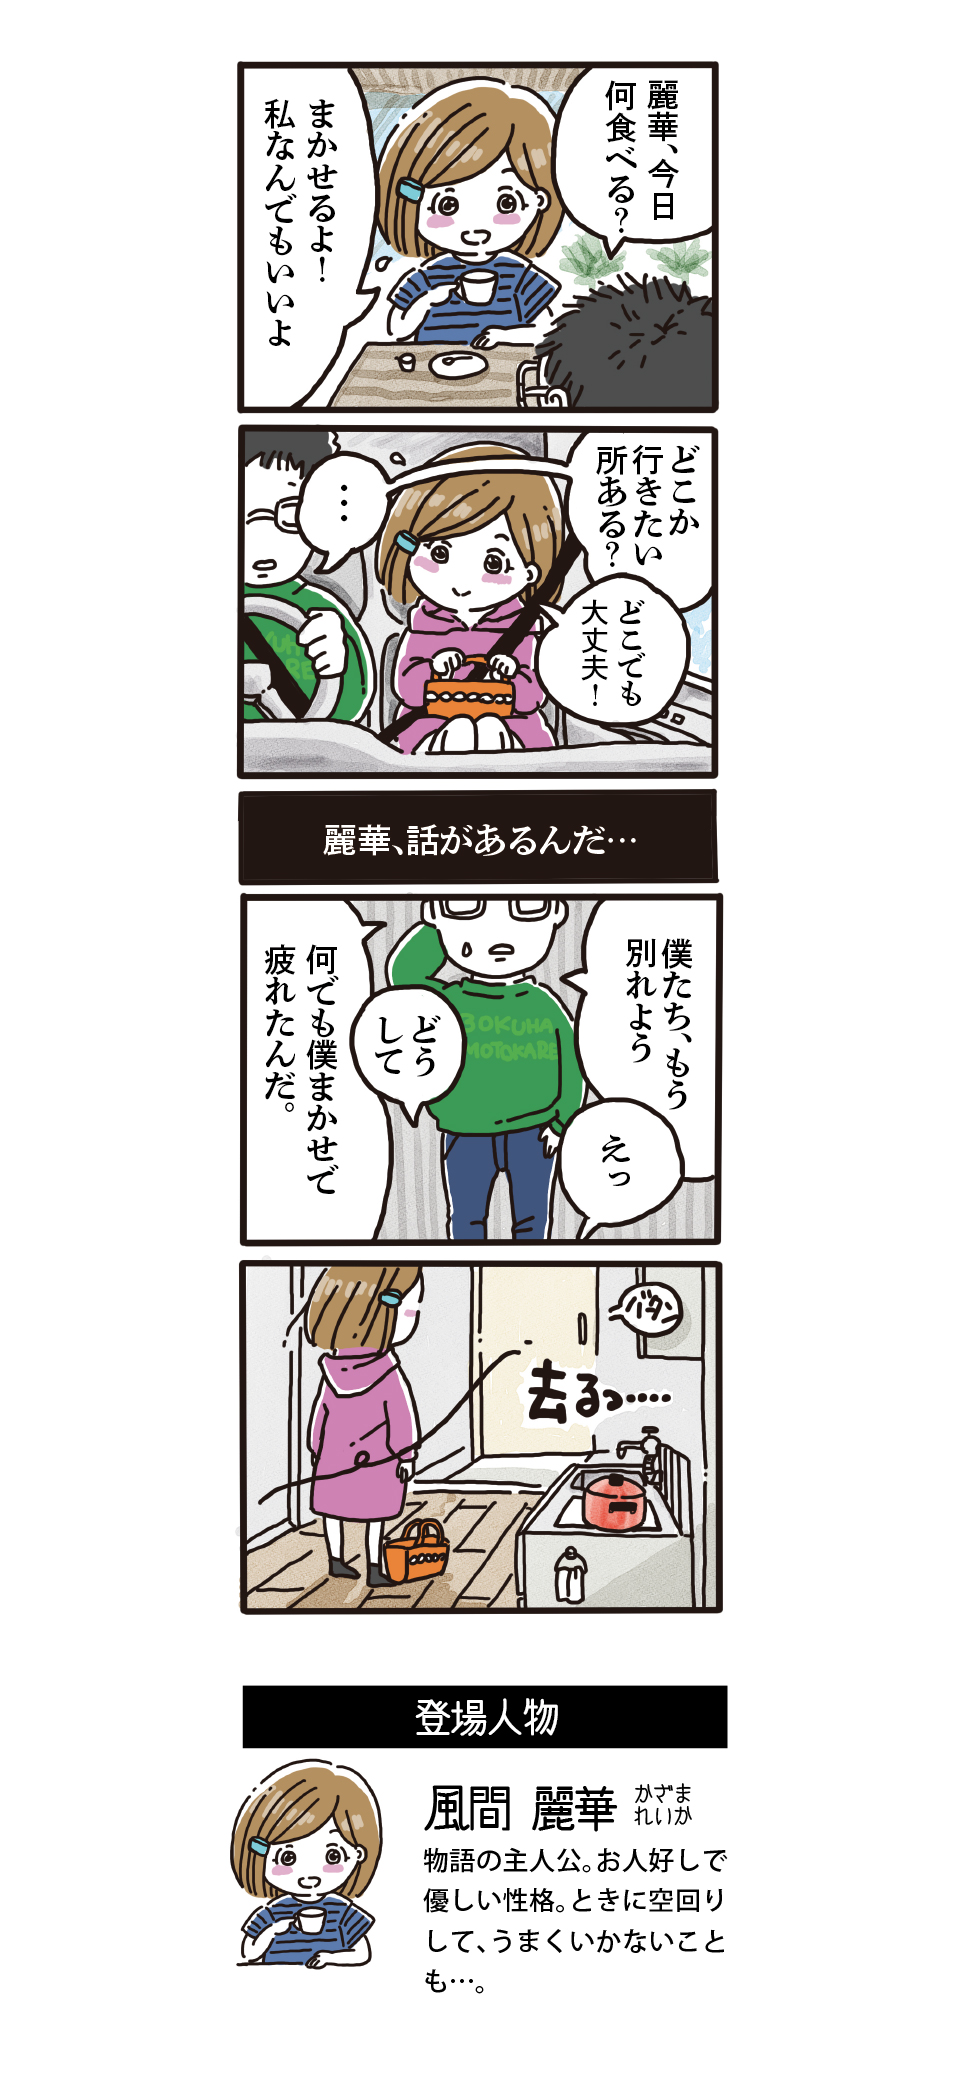 【web漫画】華麗なるSOUZOKU  #1 